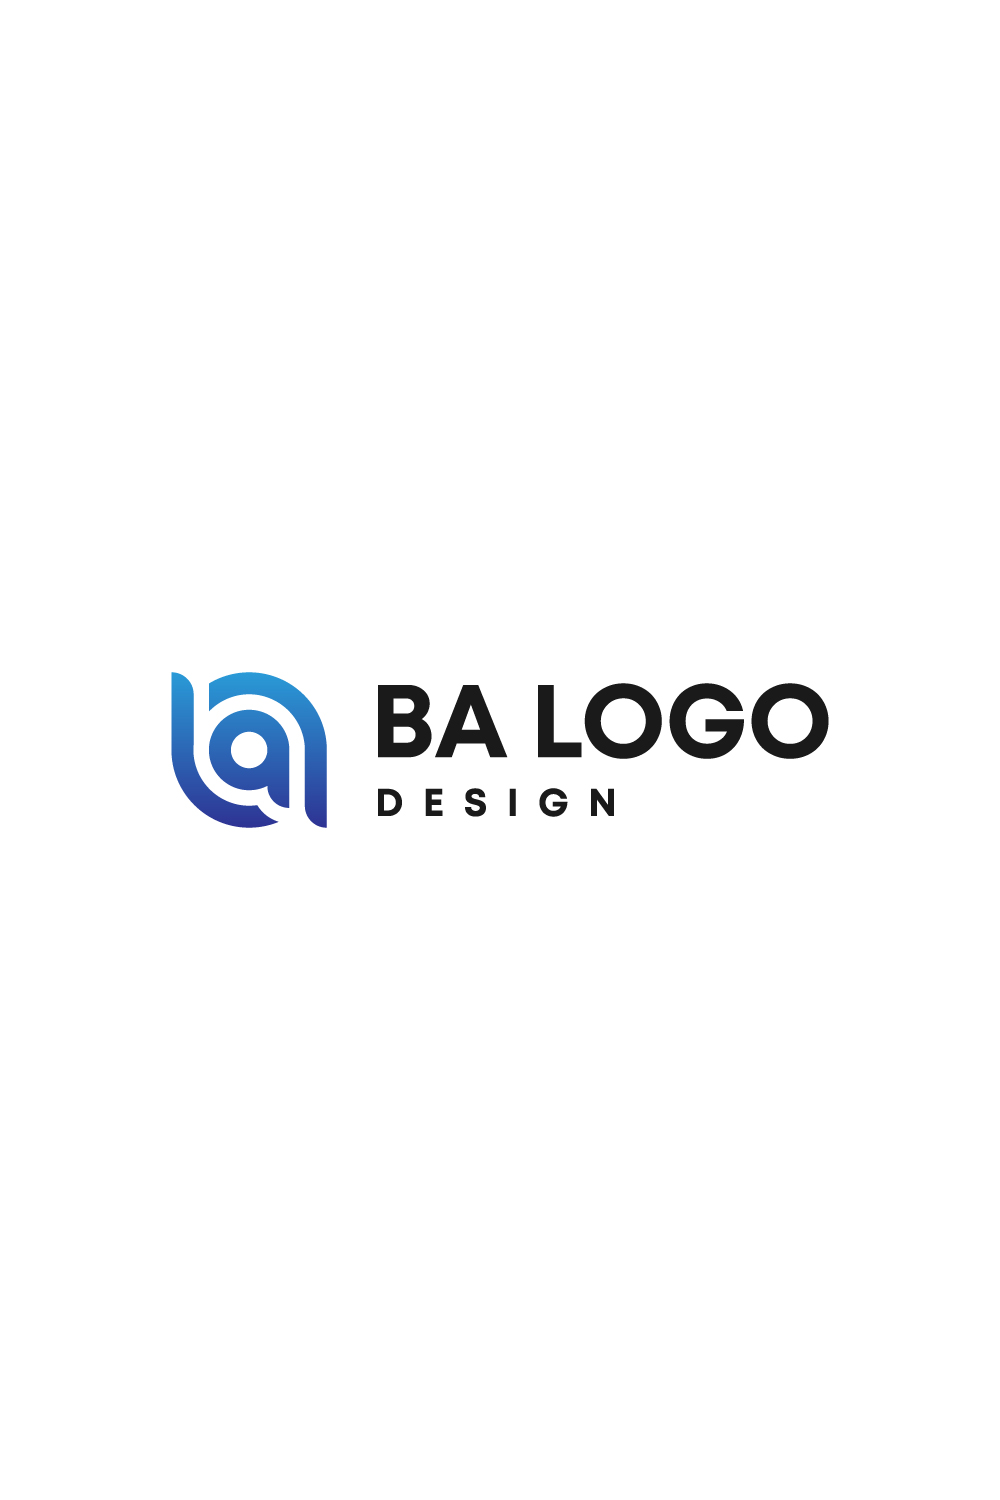 BA logo Design pinterest preview image.